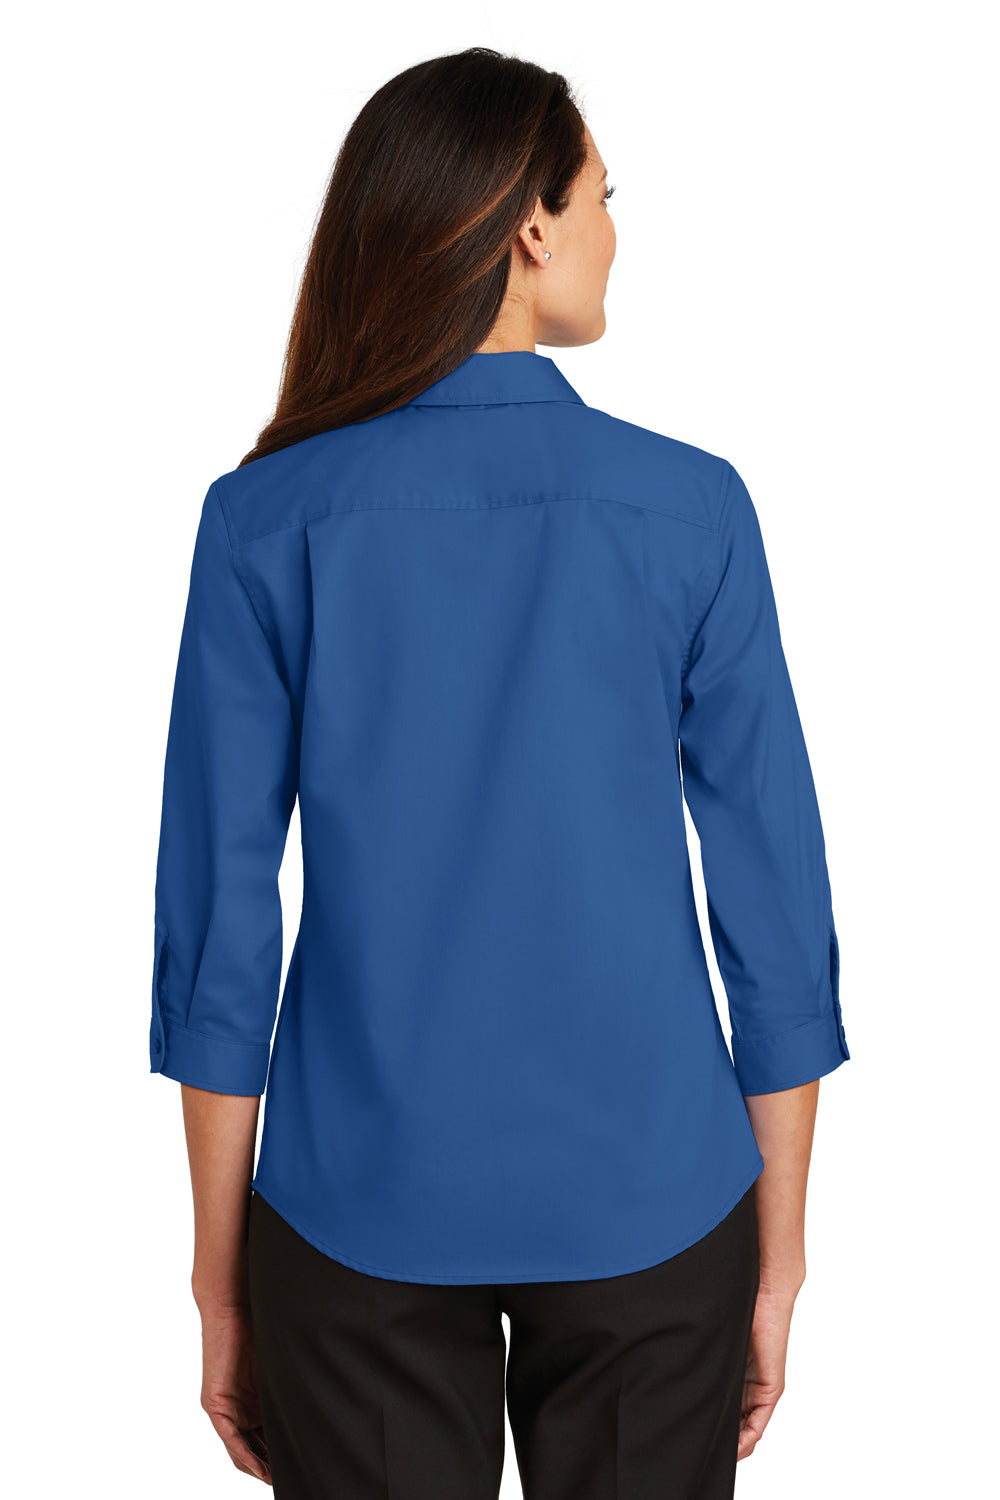 Port Authority L665 Womens SuperPro Wrinkle Resistant 3/4 Sleeve Button Down Shirt Royal Blue Back